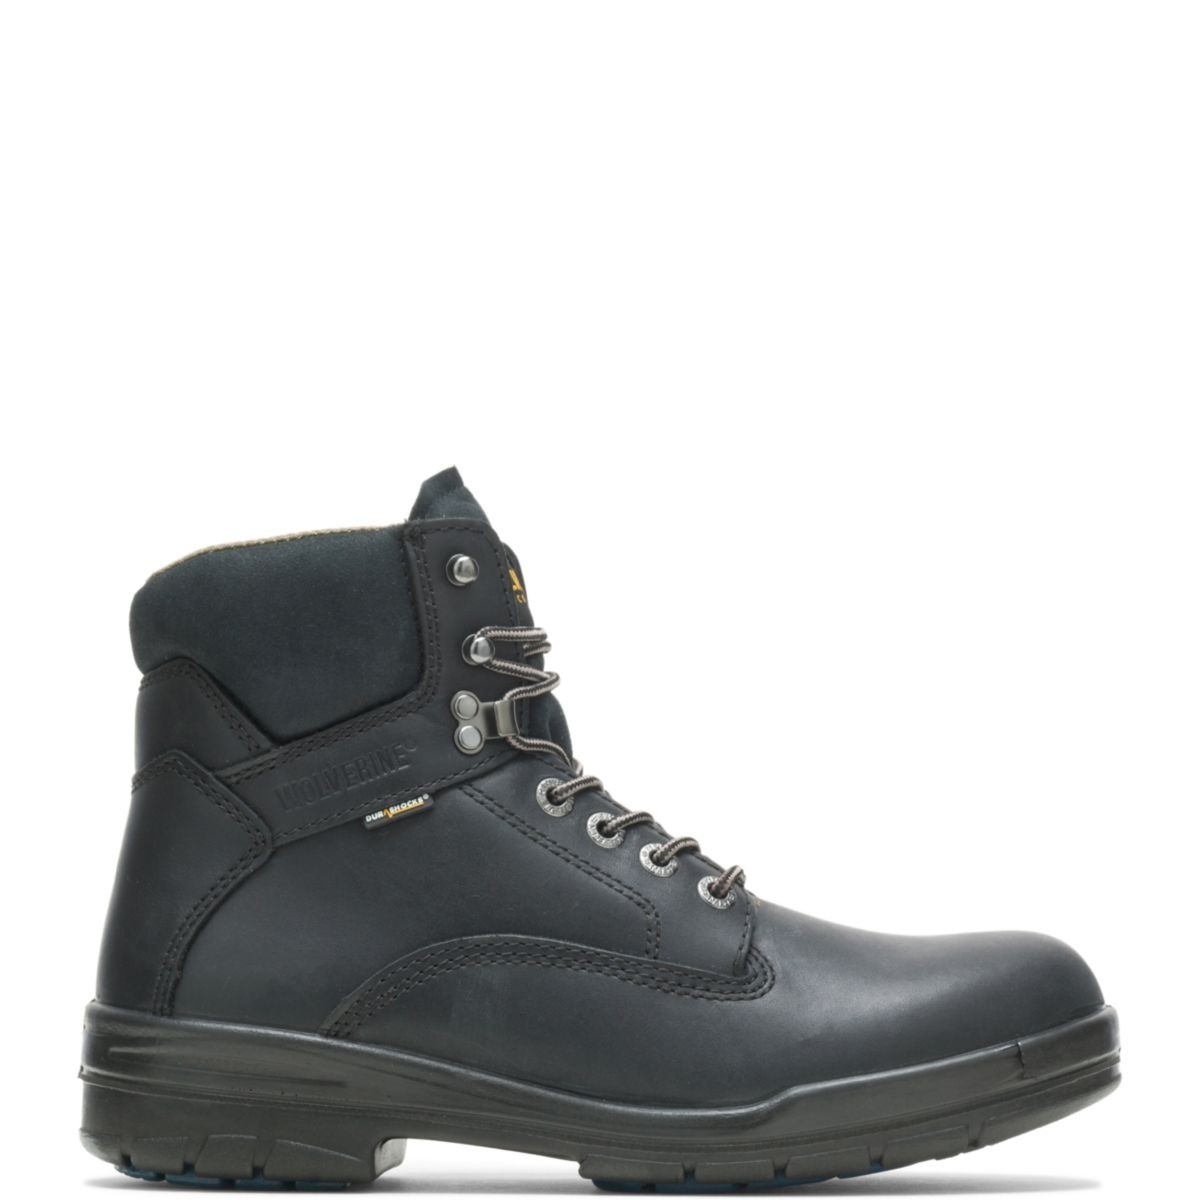 WOLVERINE Men's 6 DuraShocksÂ® Slip Resistant Direct-Attached Lined Soft Toe Work Boot Black - W03123 14 WIDE BLACK - BLACK, 9 Wide